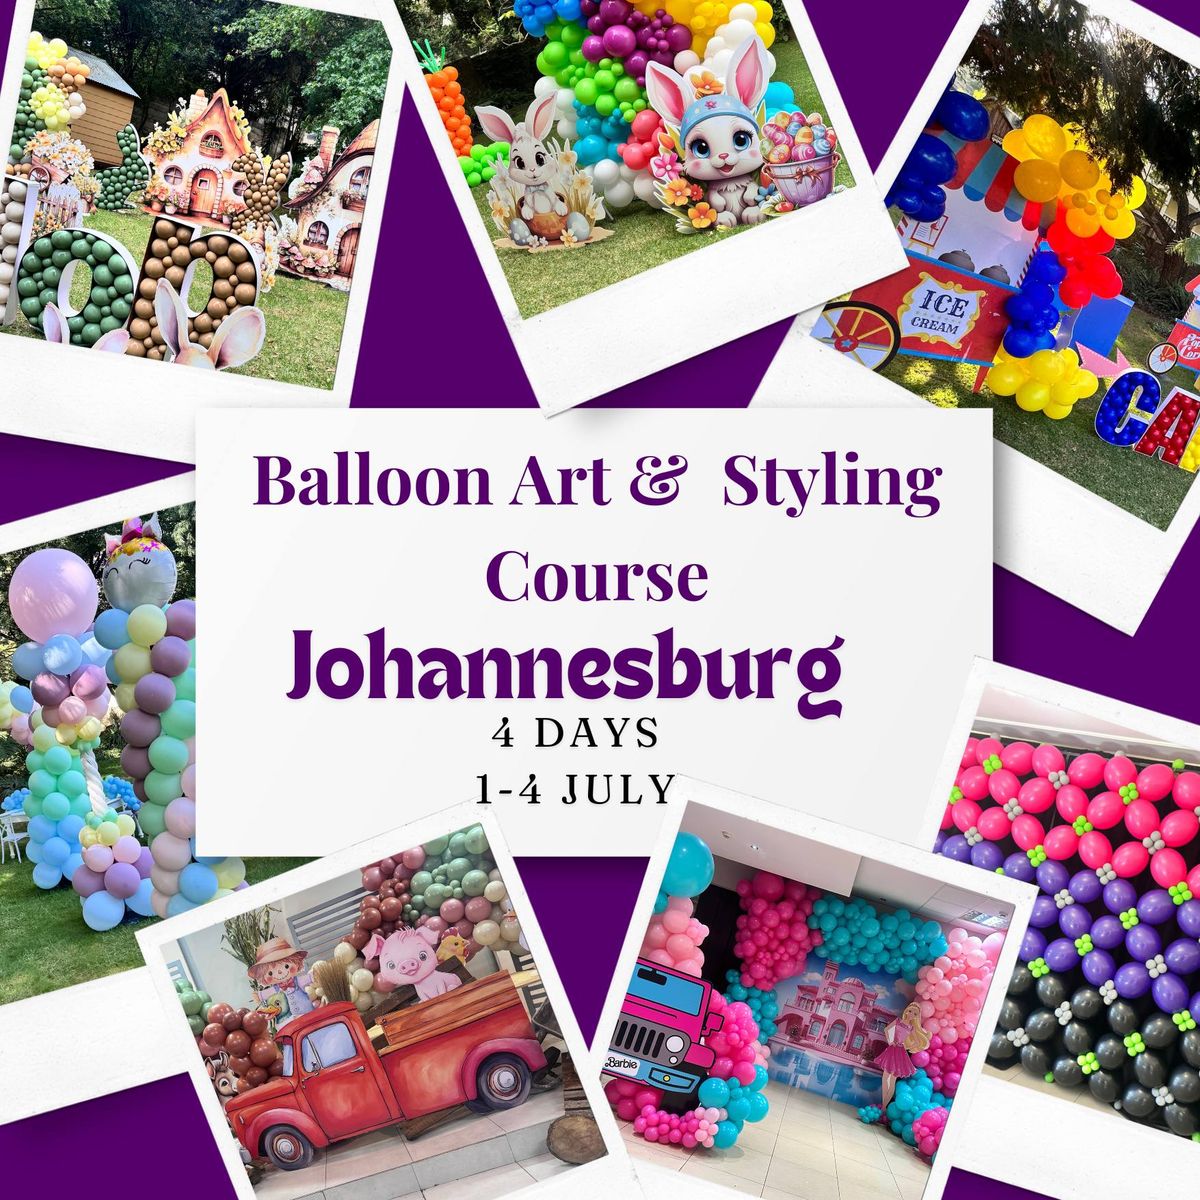 Balloon Art & Styling Course